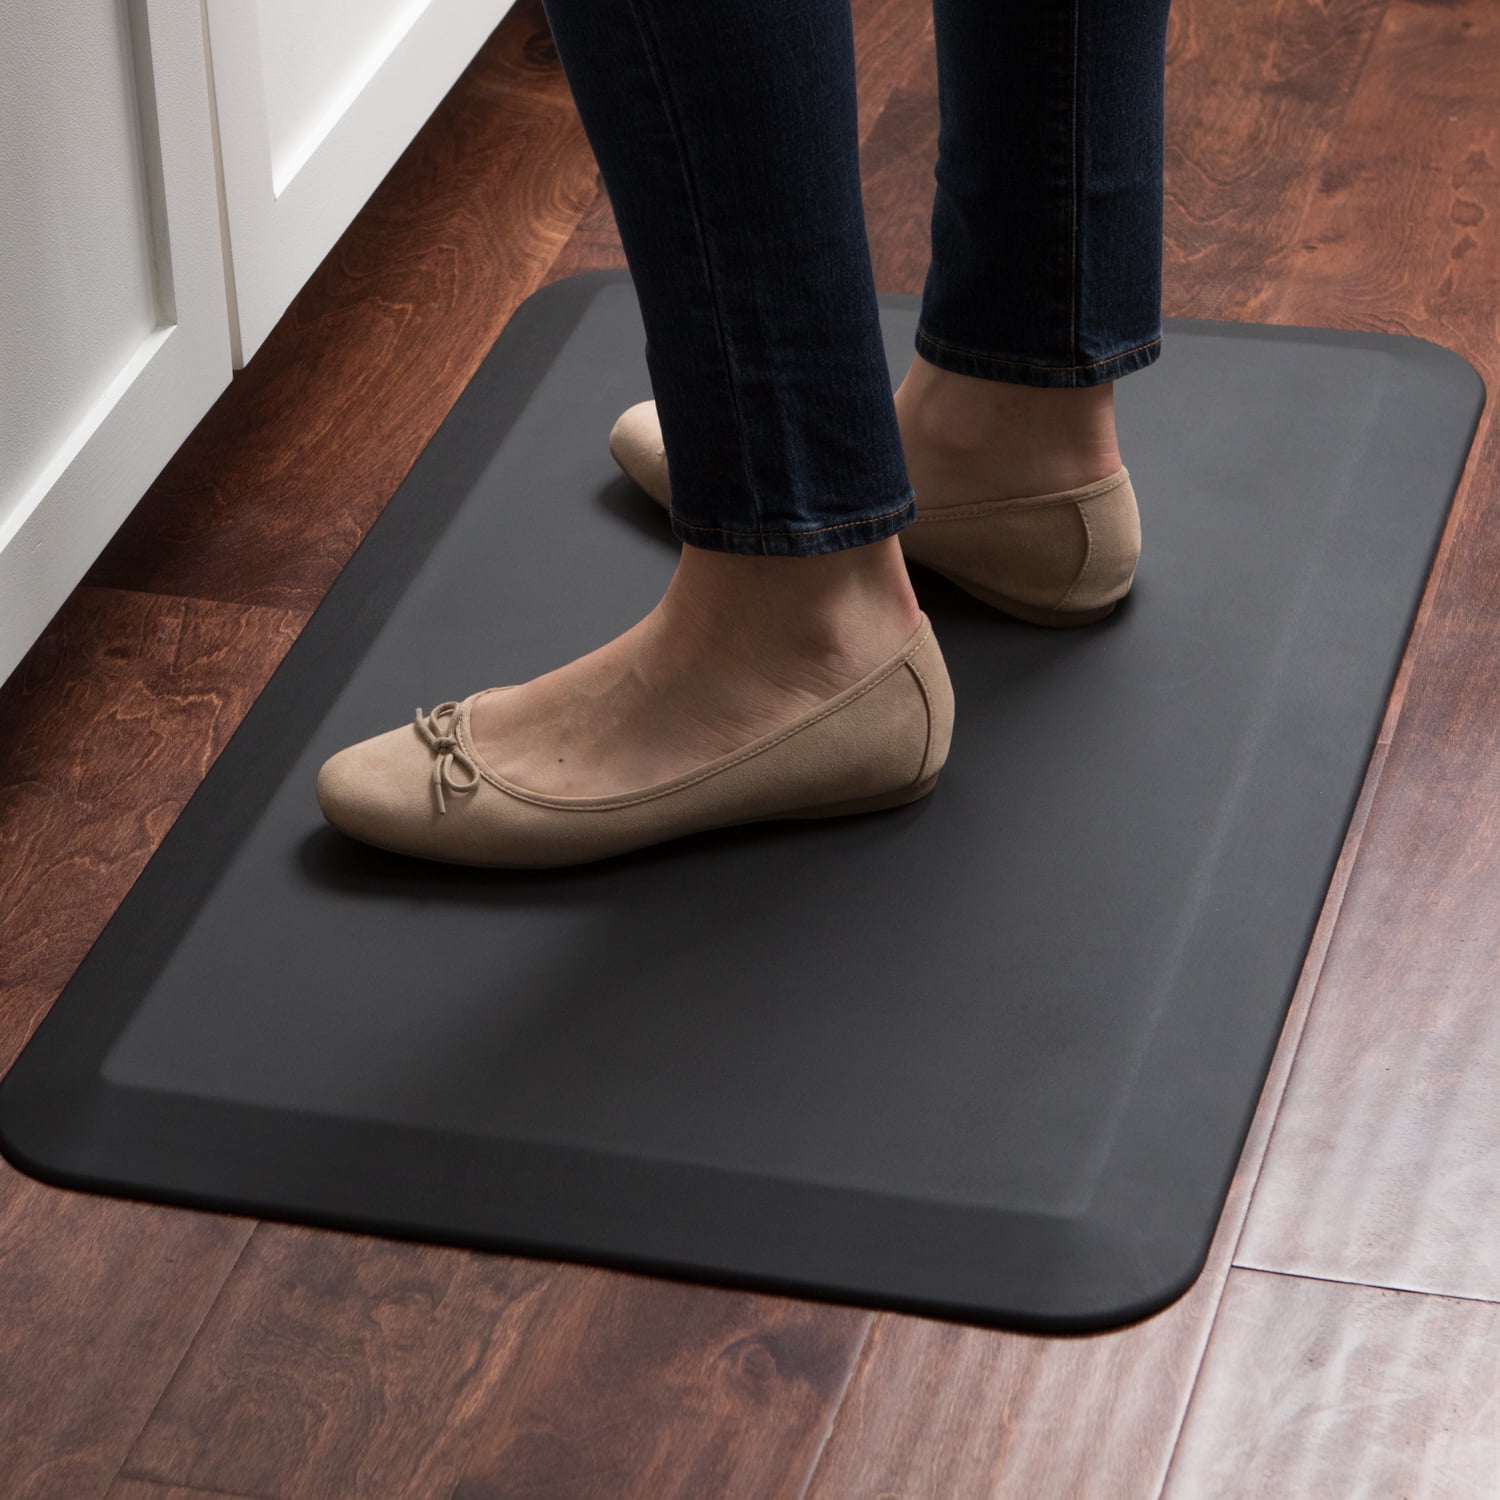 NewLife by GelPro Anti-Fatigue Comfort Kitchen Floor Mat 20x32